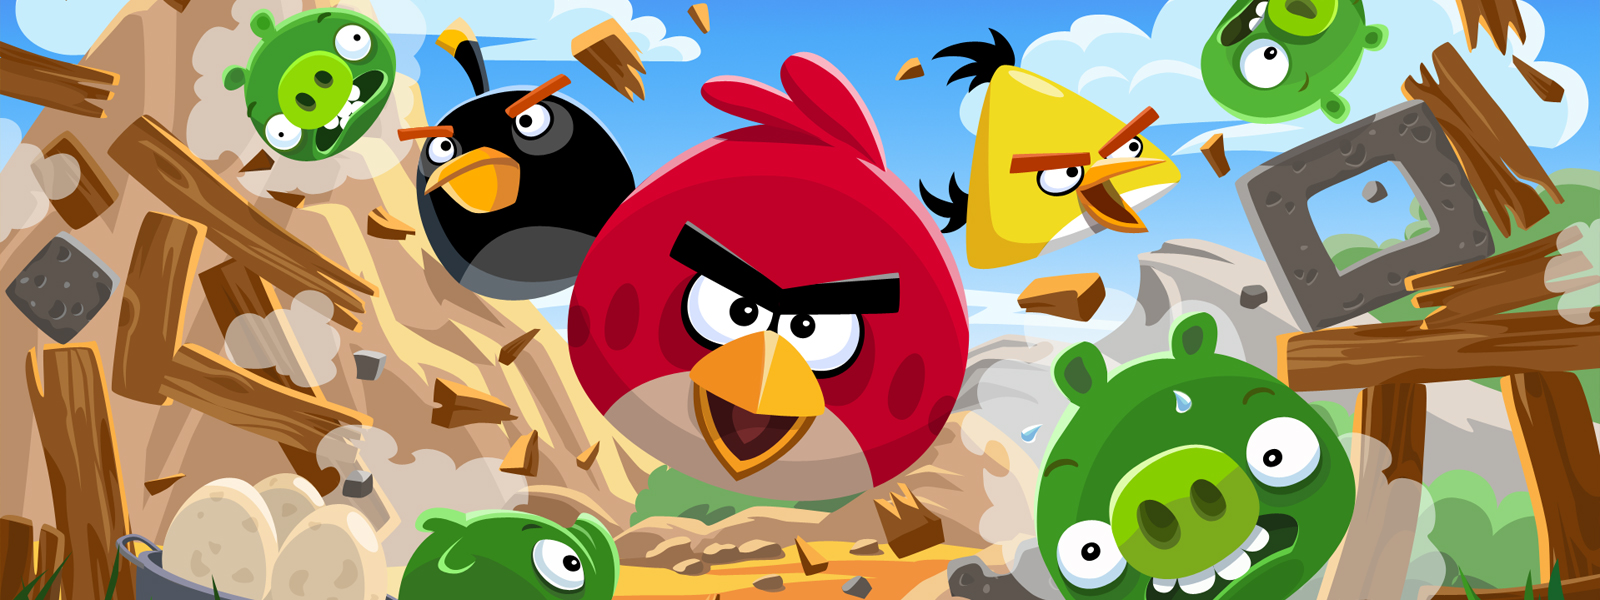 angry birds  Angry Birds Photo 33464210  Fanpop